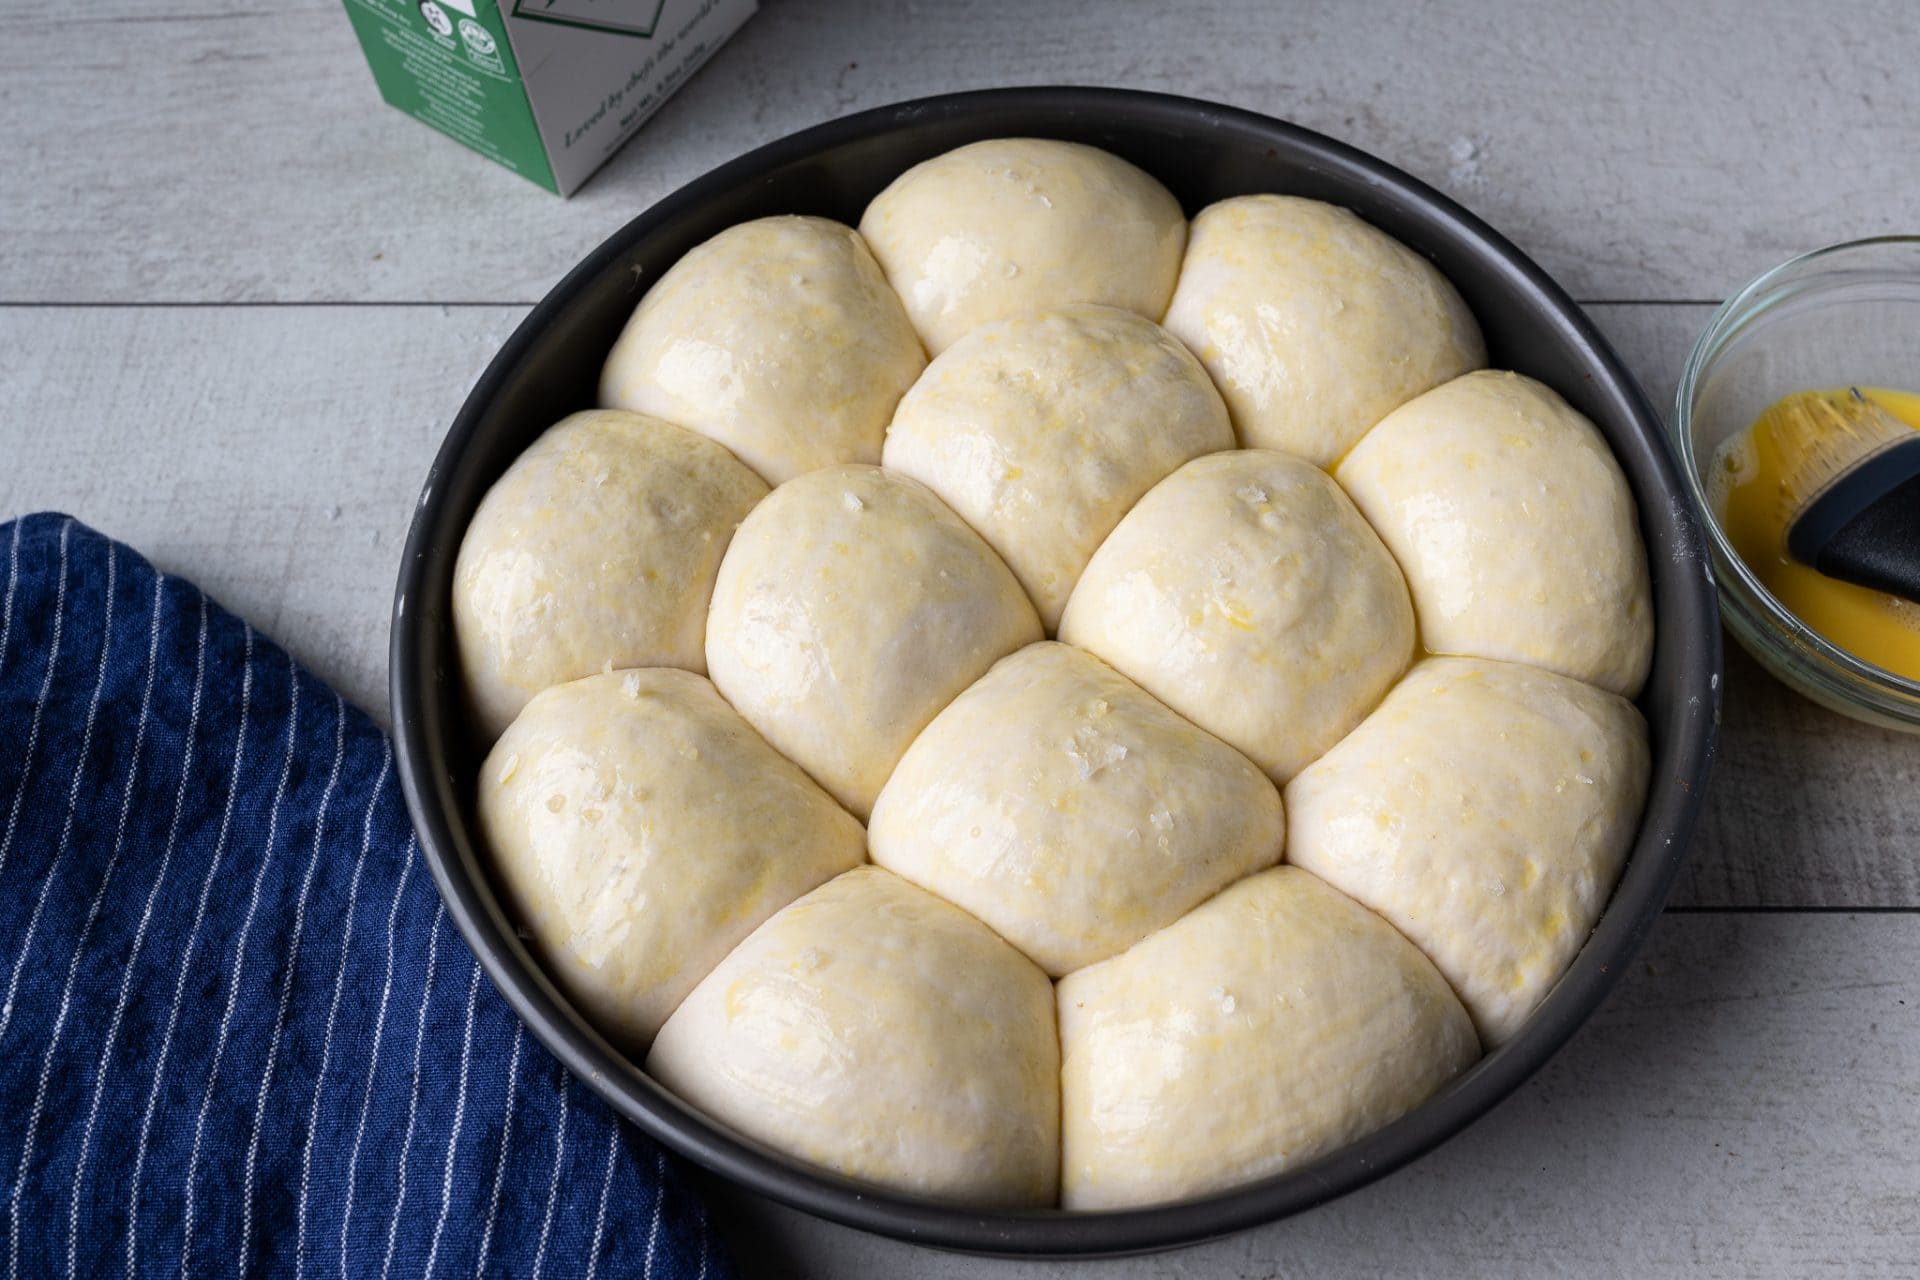 Super soft sourdough dinner rolls ready for the oven